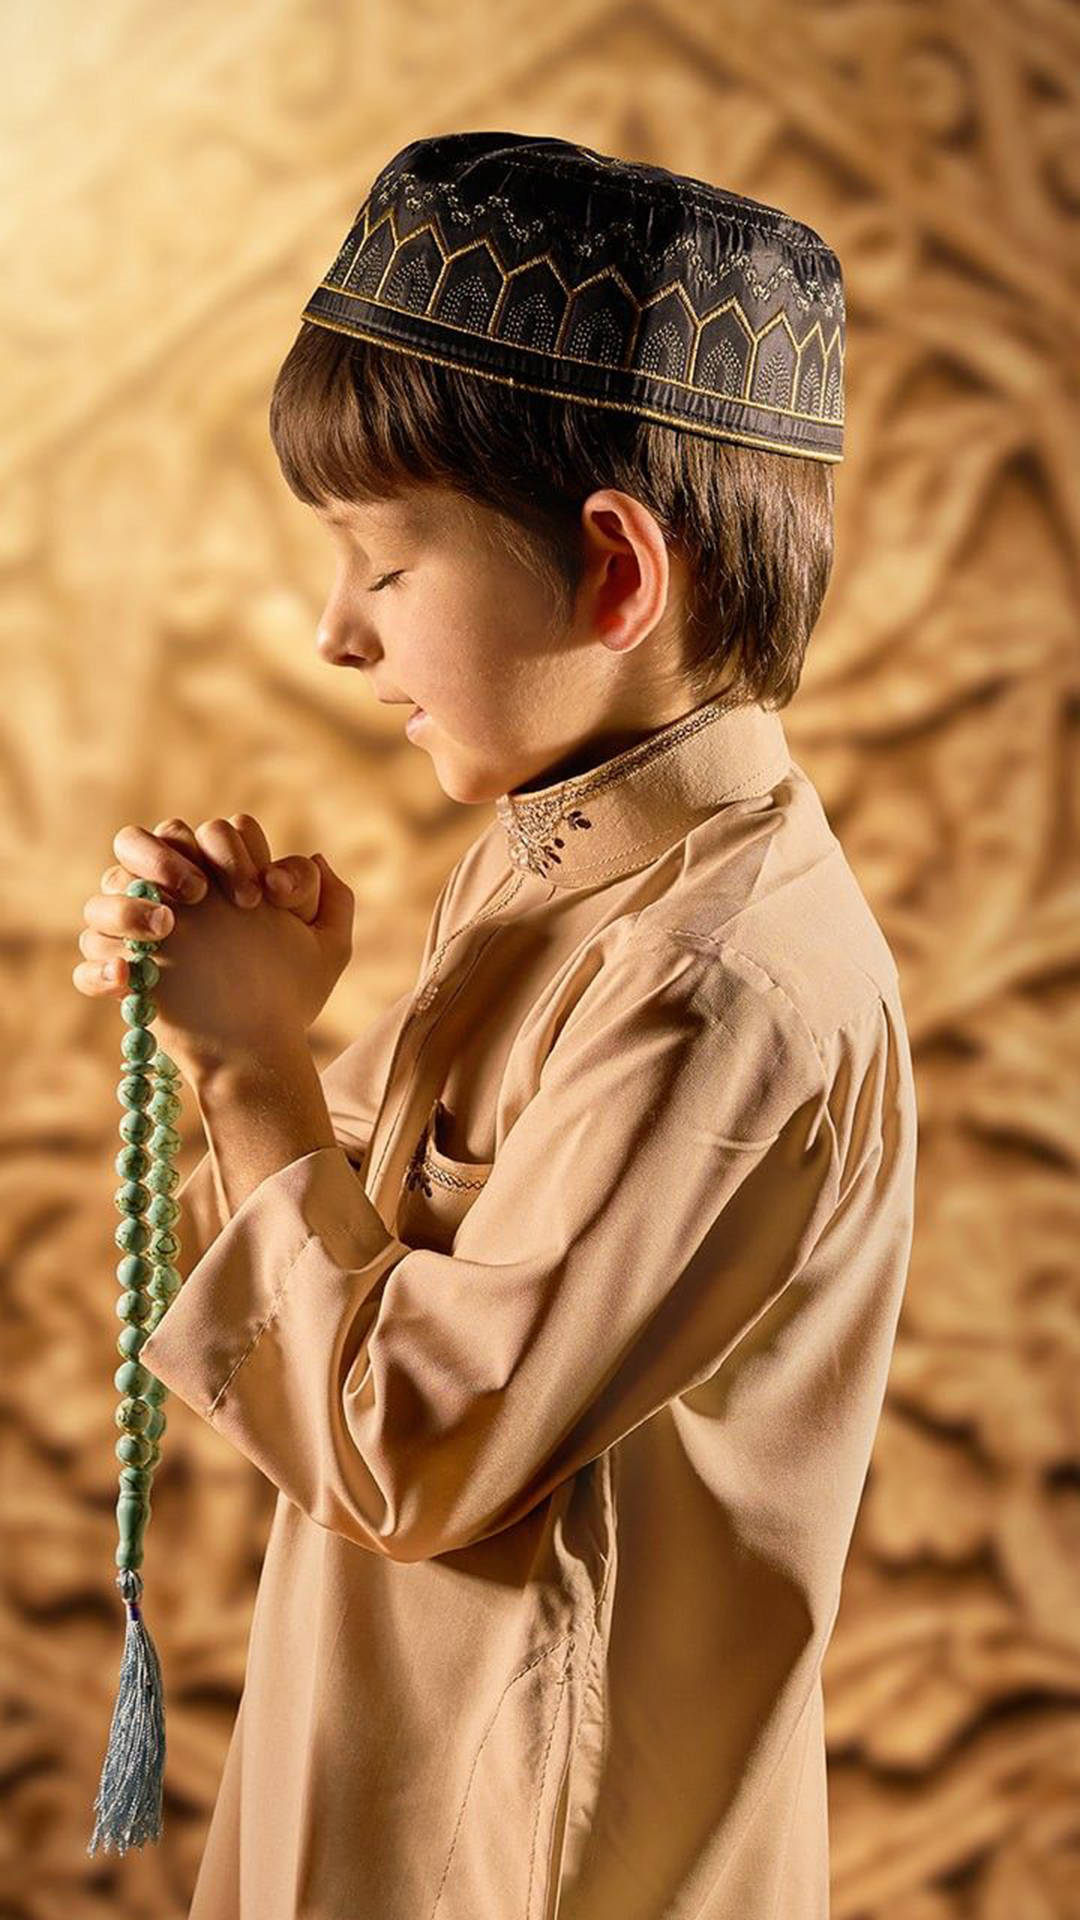 Praying Little Islamic Boy Picture